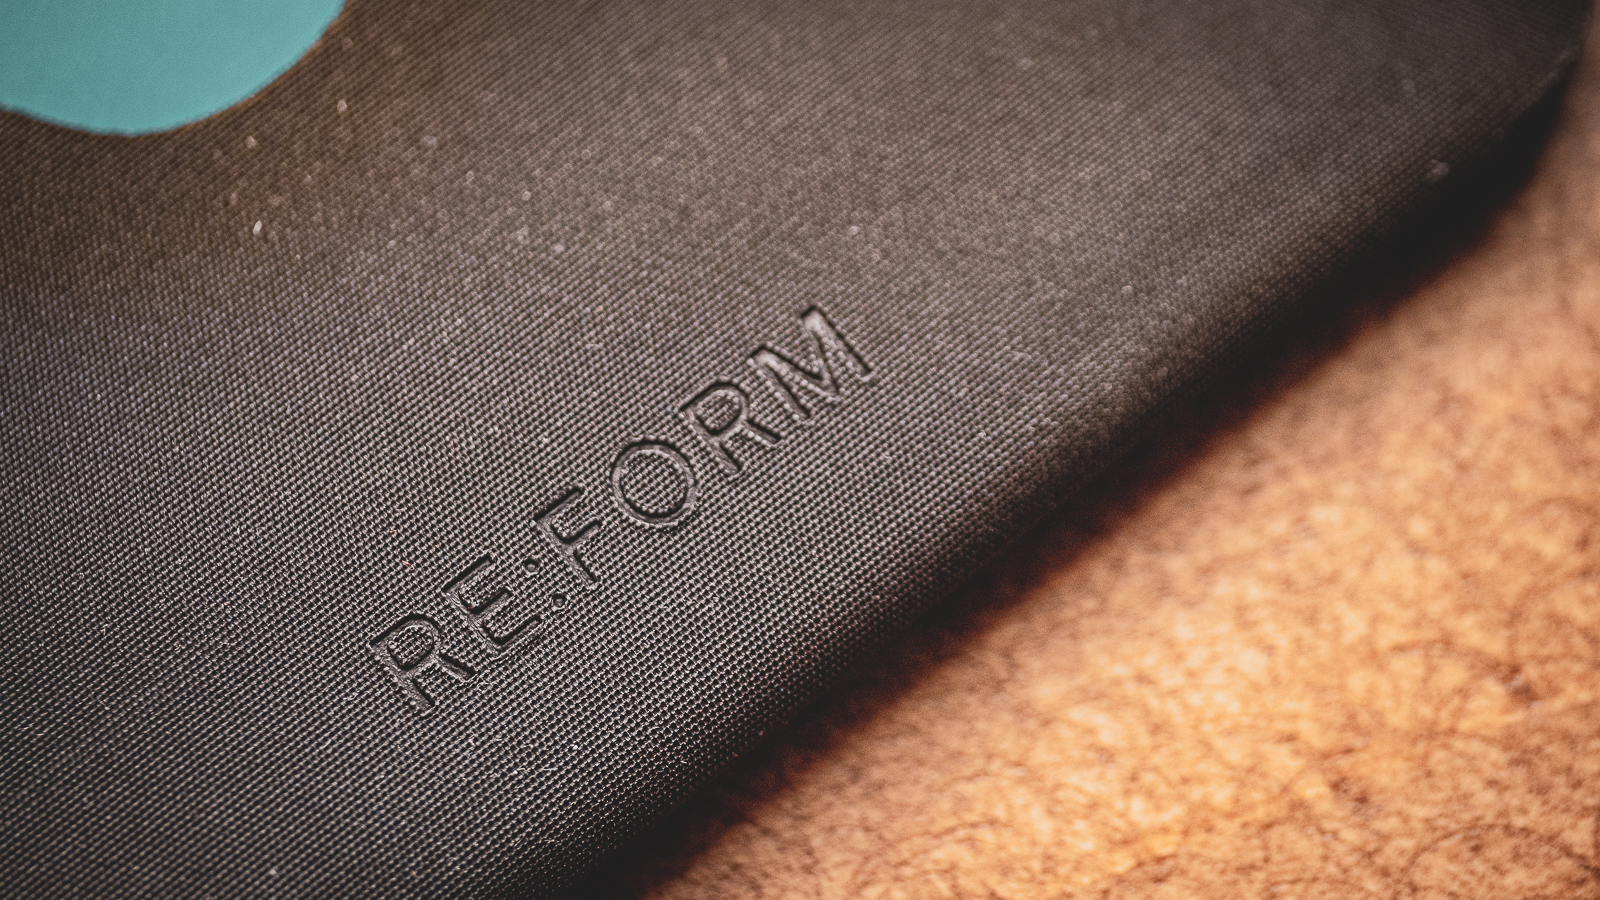 RE:FORM Introduces Modern, Versatile Wallets